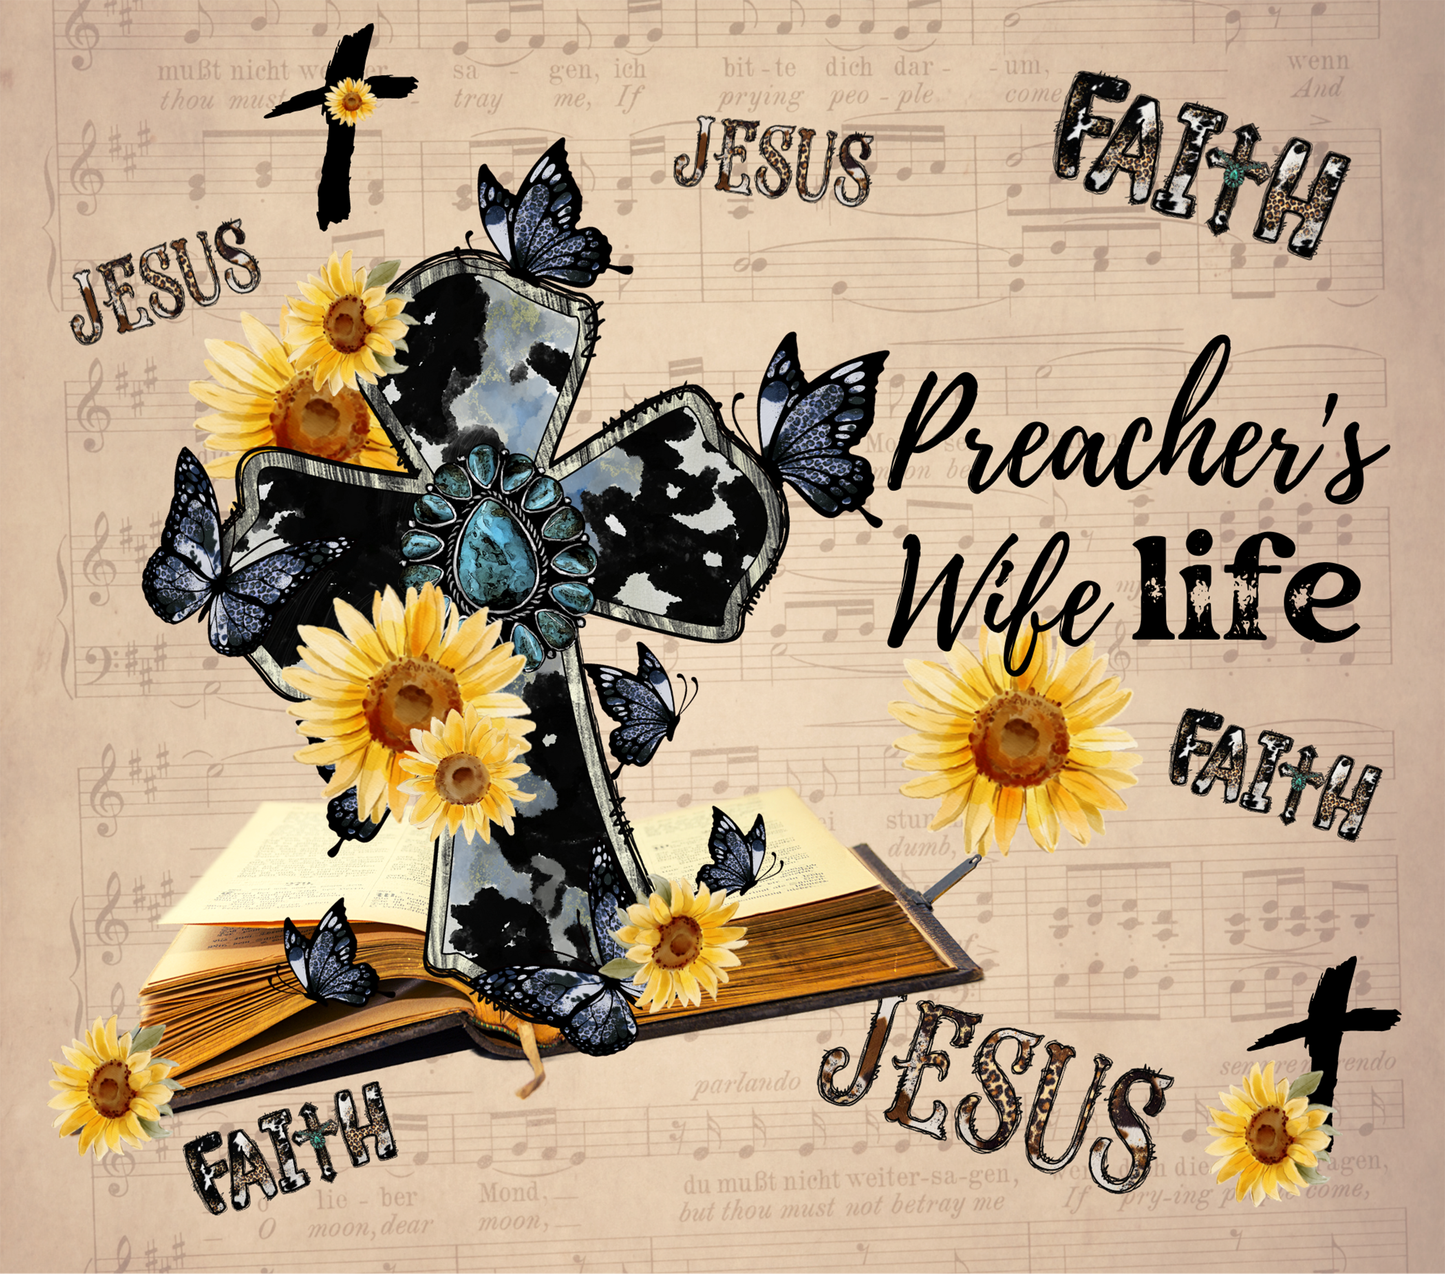 Preacher Wife Life - 20 Oz Sublimation Transfer